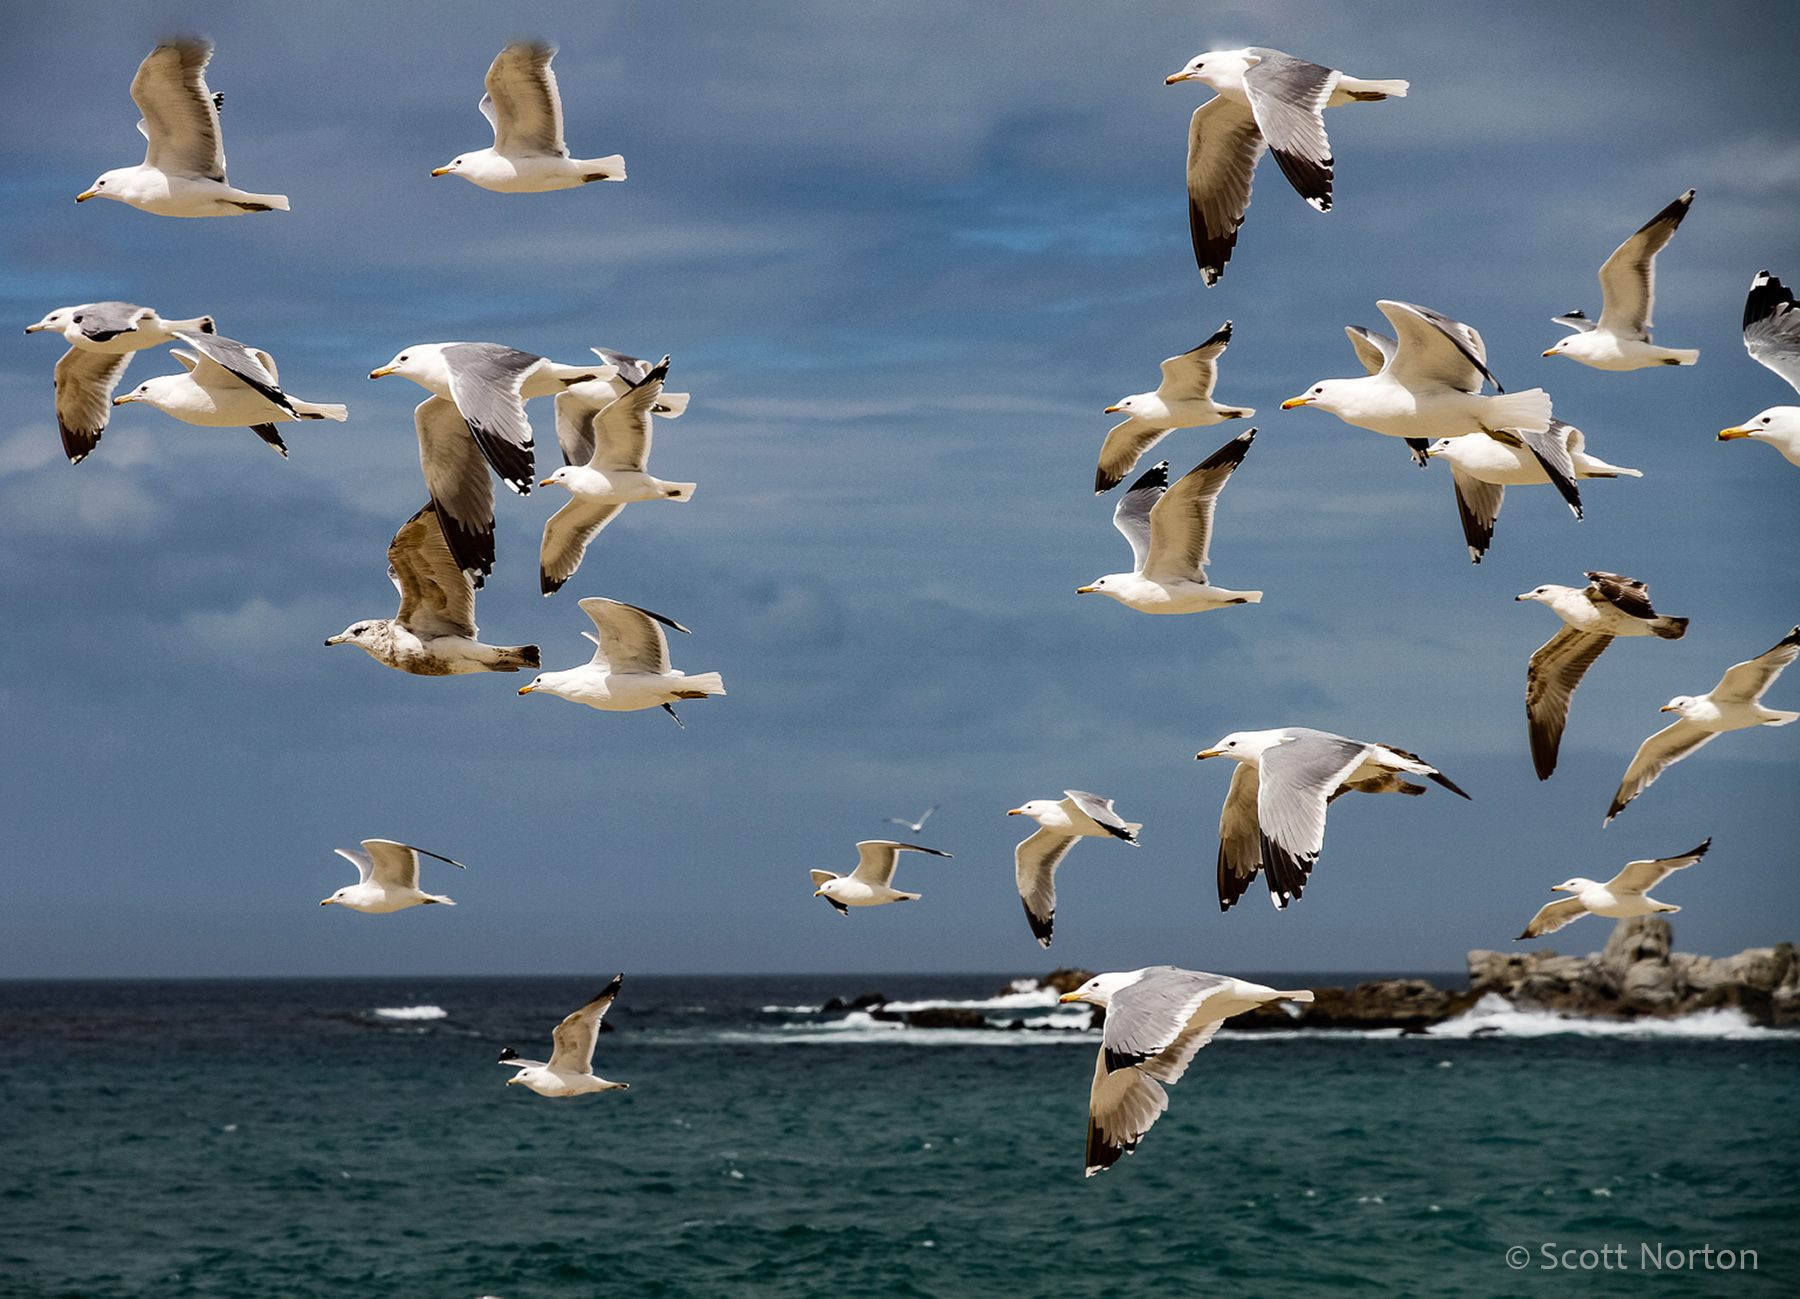 a flock of seagulls flying over carmel river beach by scott norton